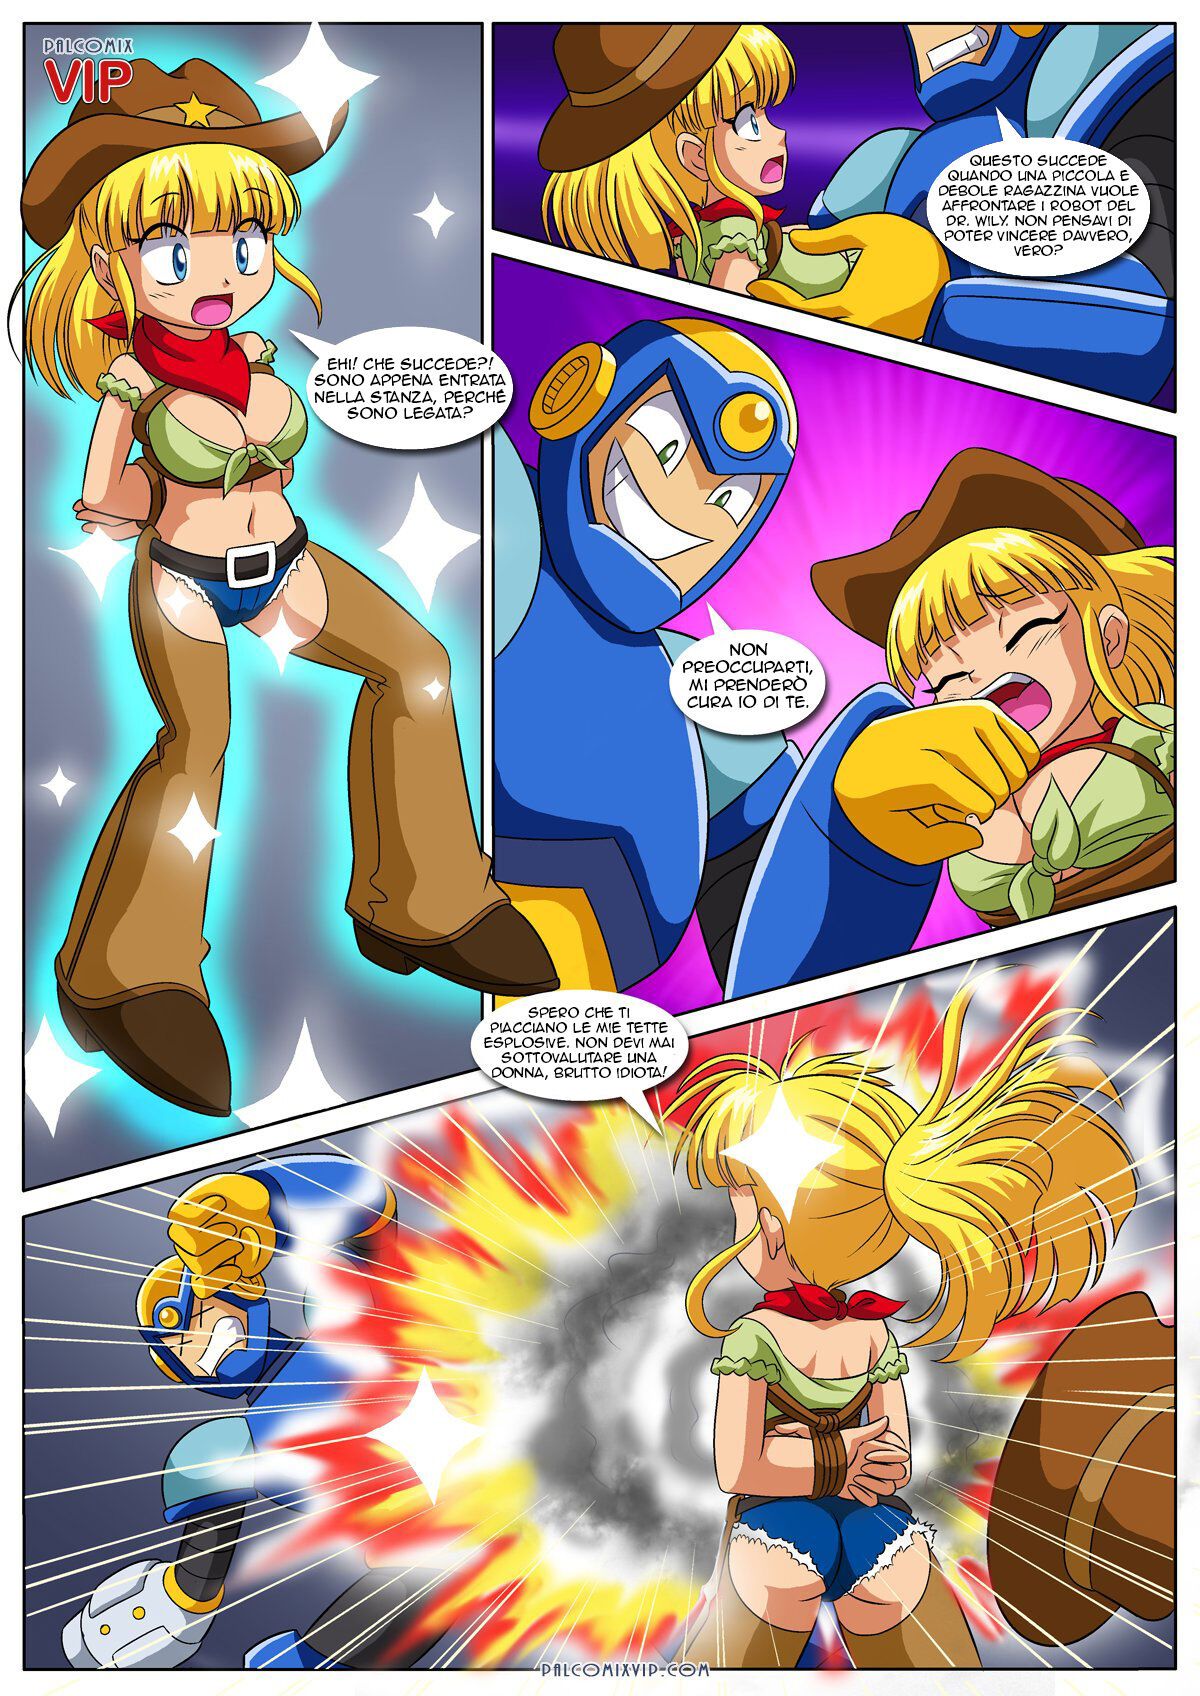 [Palcomix] Rolling Buster 2 (Mega Man) (italian) 12